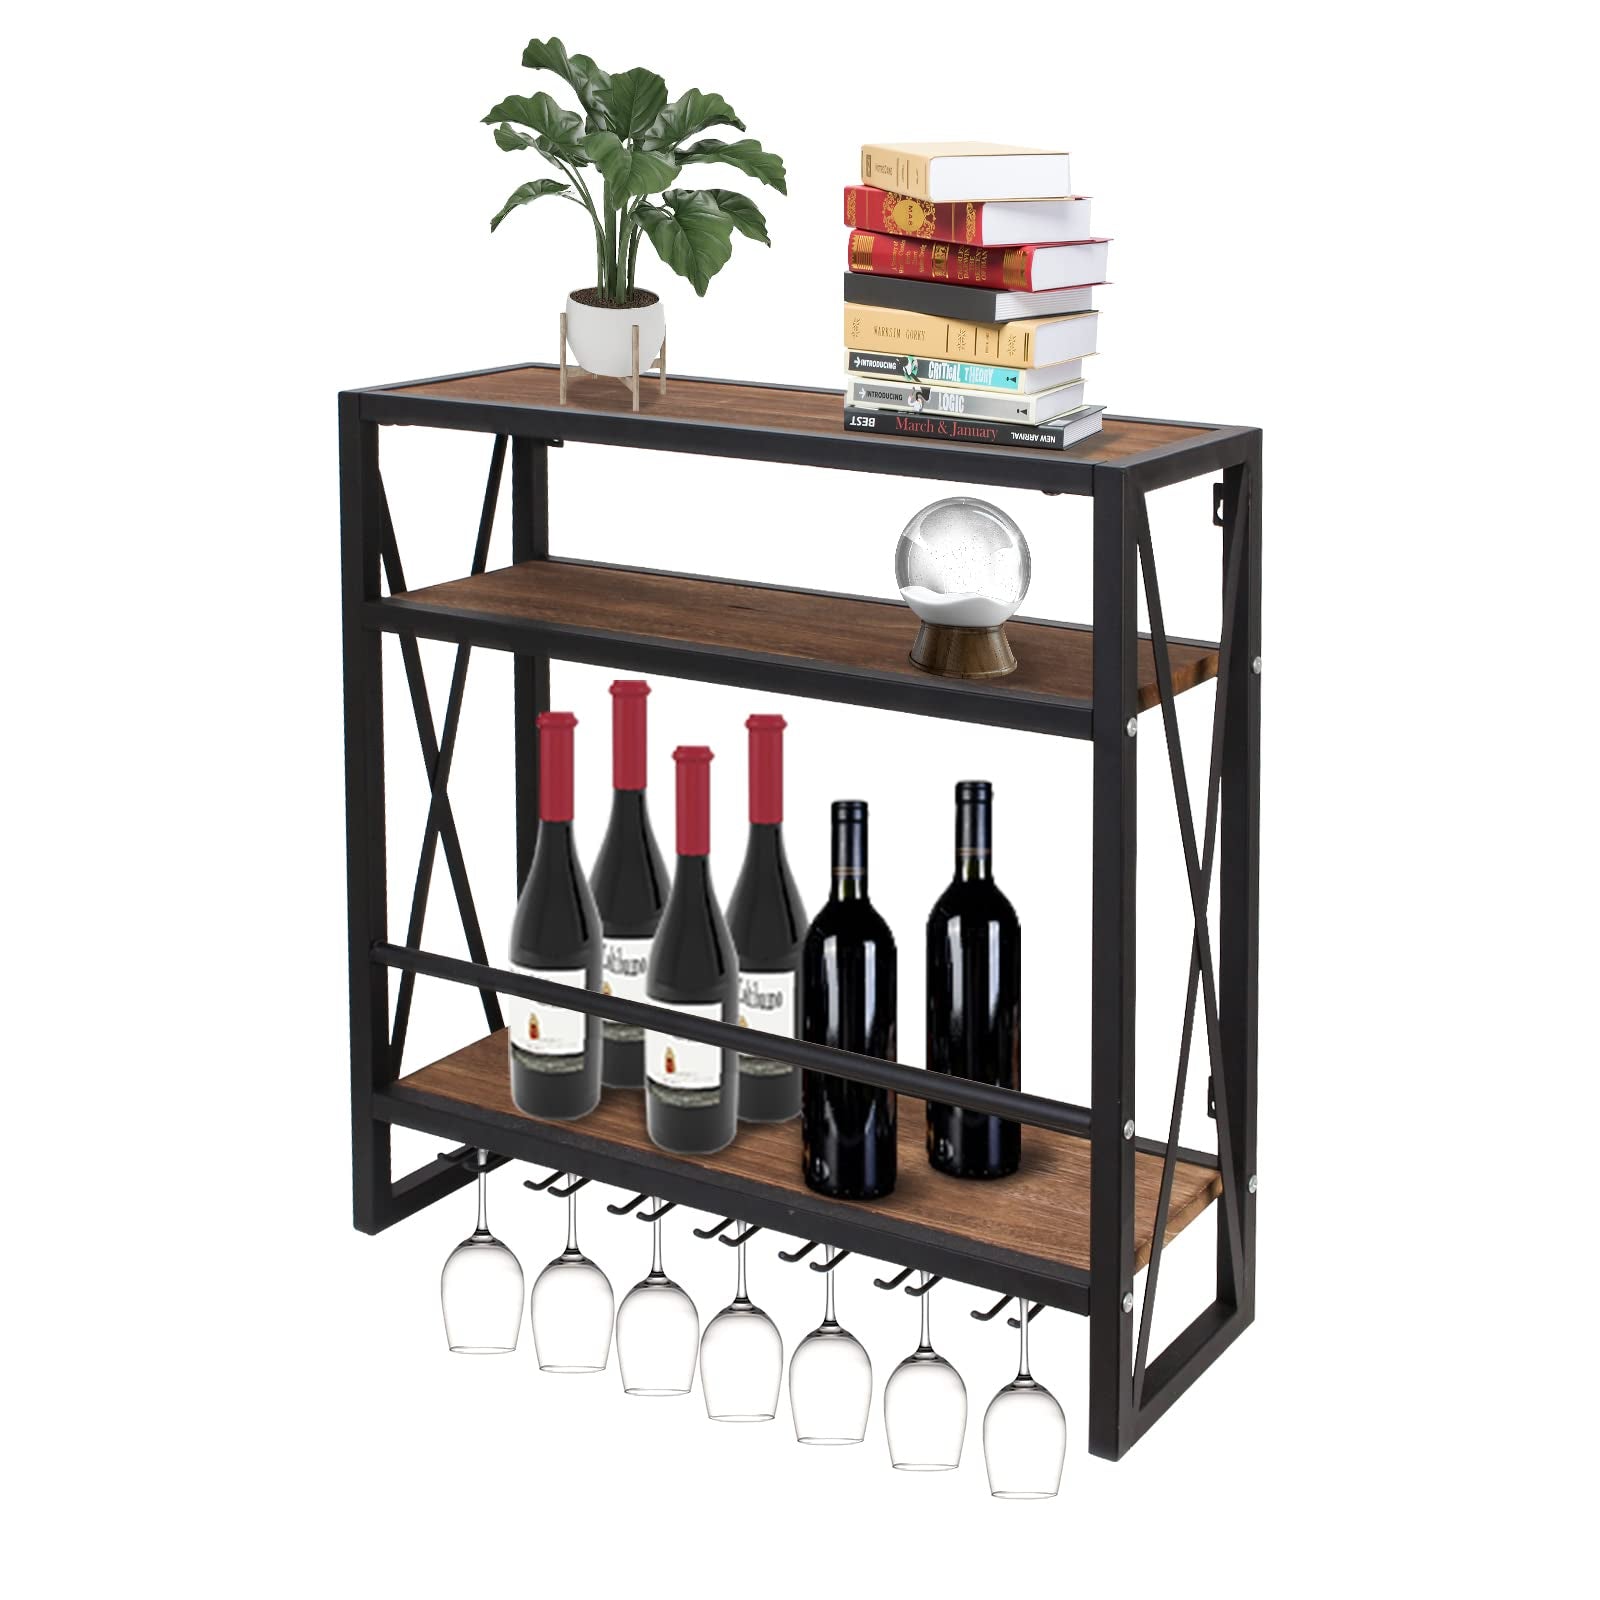 Todeco-Wall-Bottle-Shelf-with-Glass-Rack-Wooden-Metal-Wine-Bottle-Rack-in-3-Tiers-for-12-Wine-Bottles-Rack-Storage-Wine-Bottle-Holder-Suitable-for-Kitchen-60-20-62cm-Wall-Bottle-Shelf